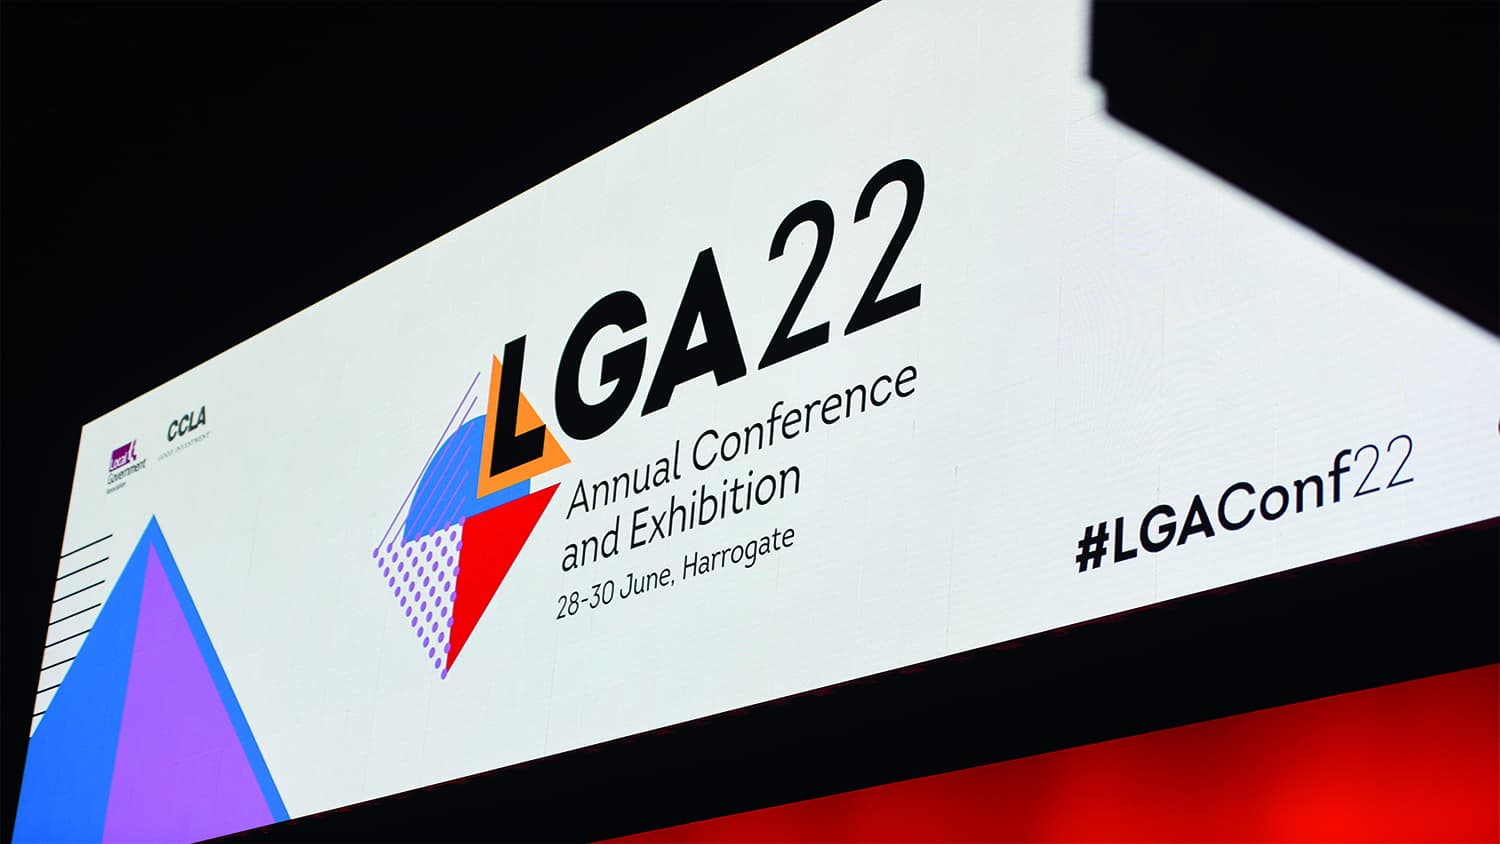 LGA Annual Conference 2022 banner